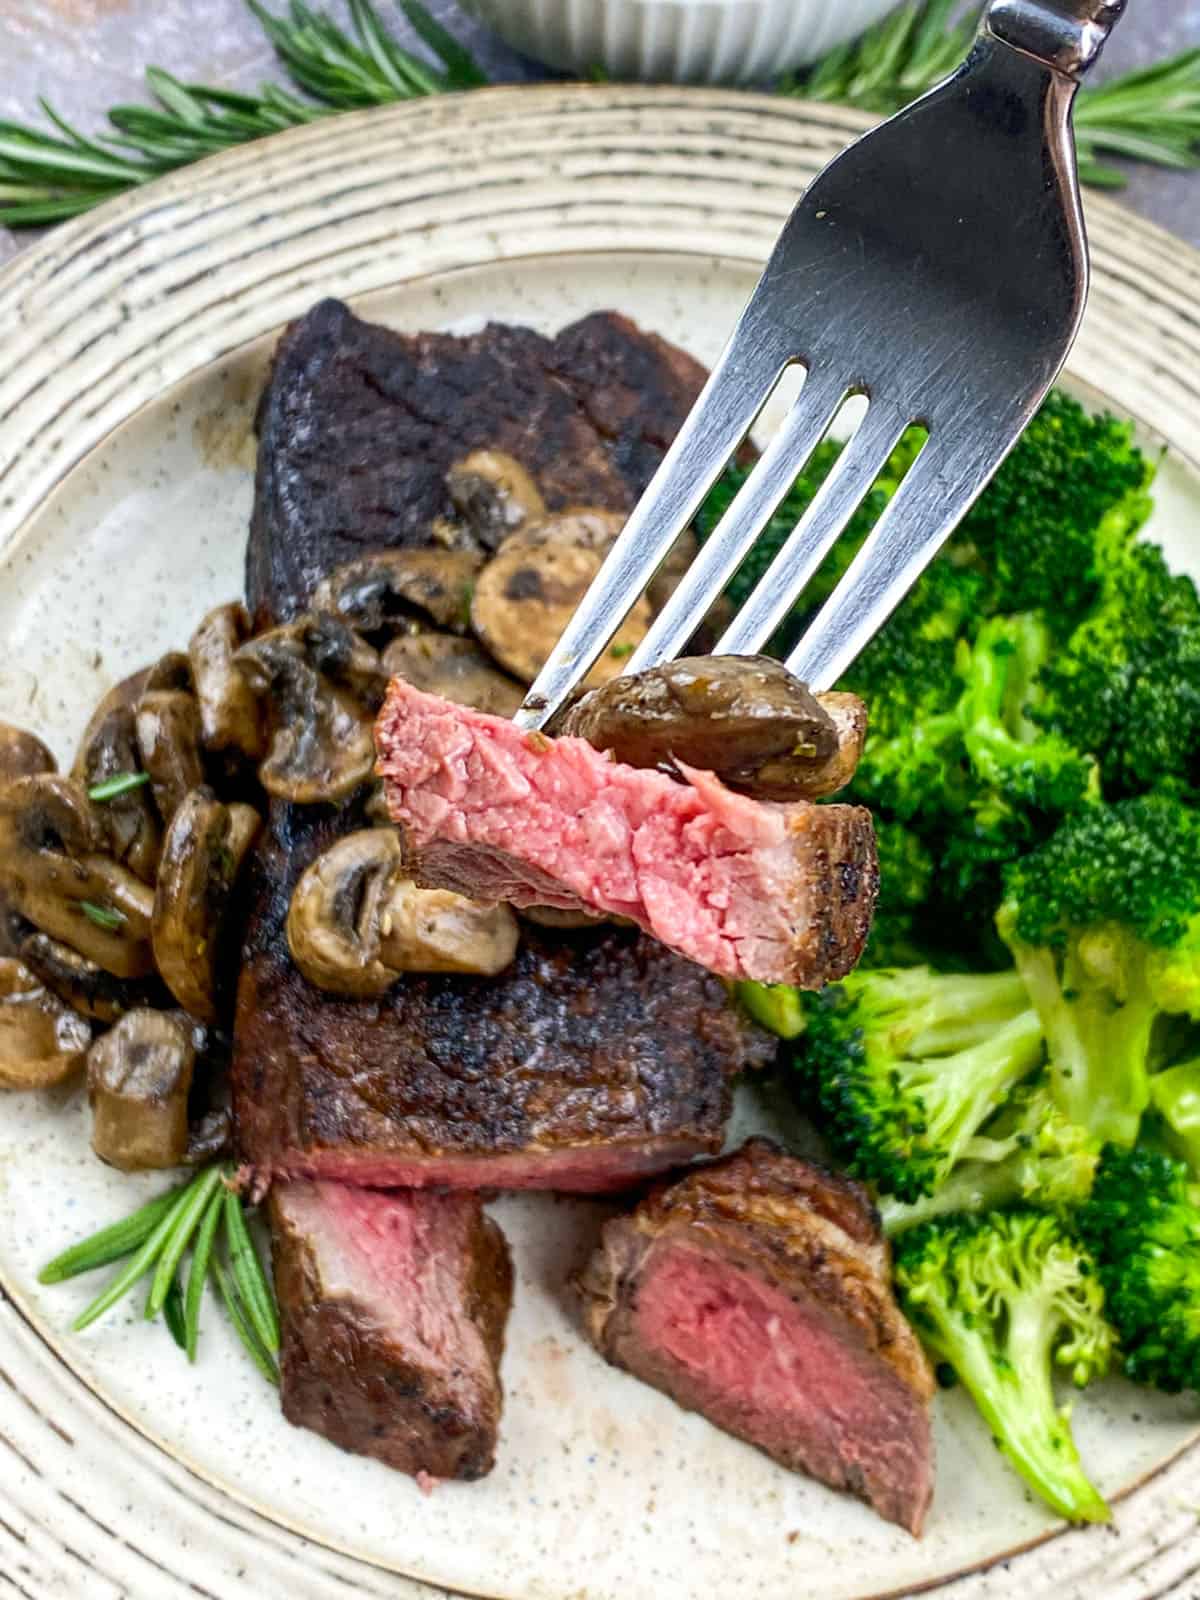 Medium rare strip steak with mushrooms and broccoli on white plate